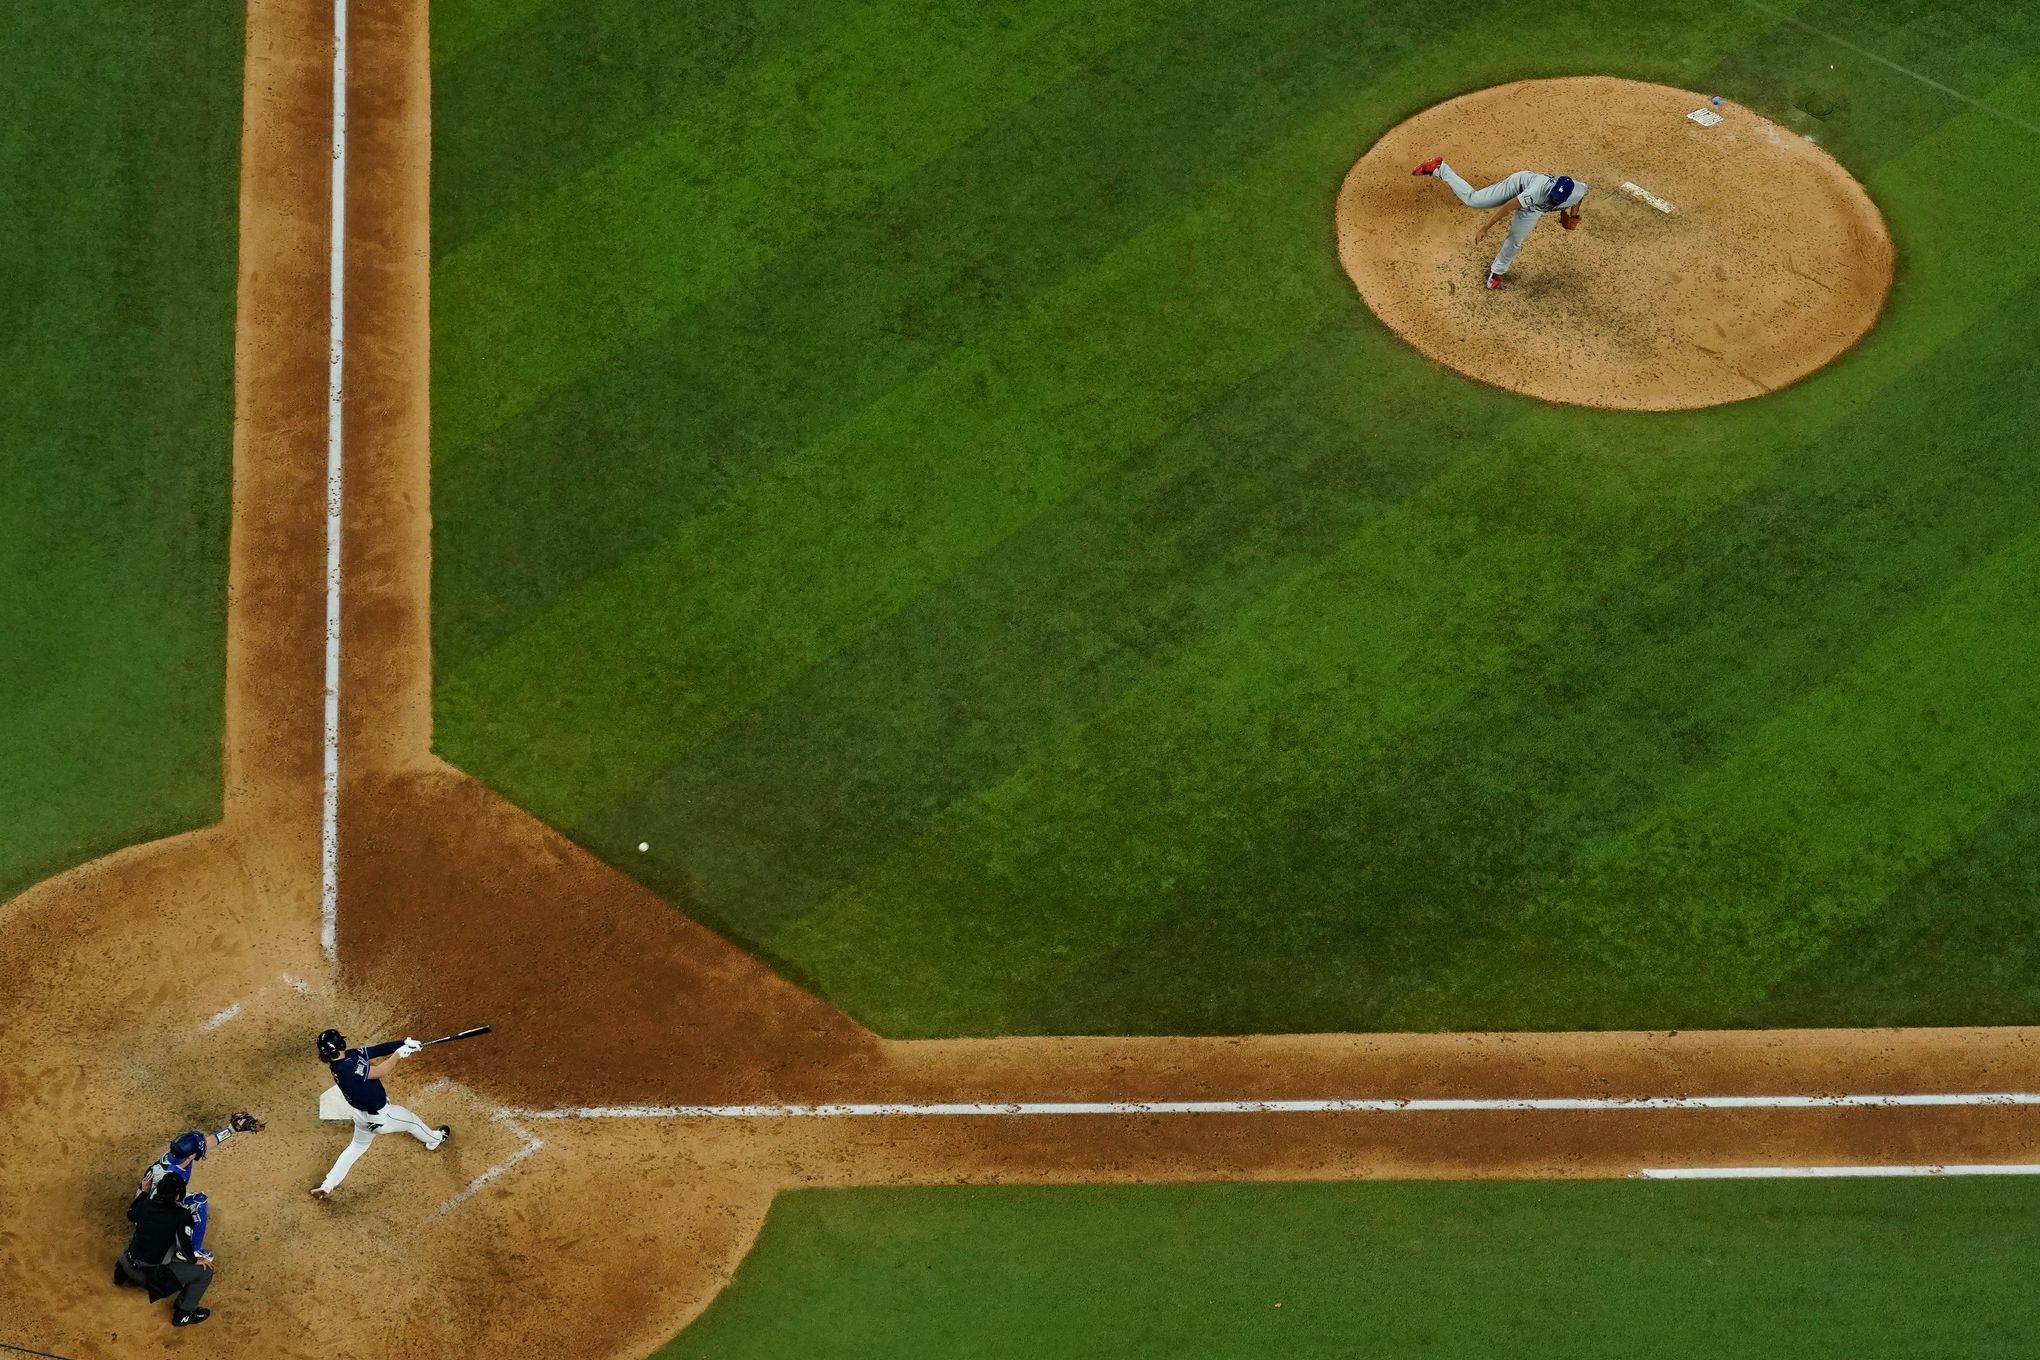 Rays' Brett Phillips wants to remind MLB that baseball is fun